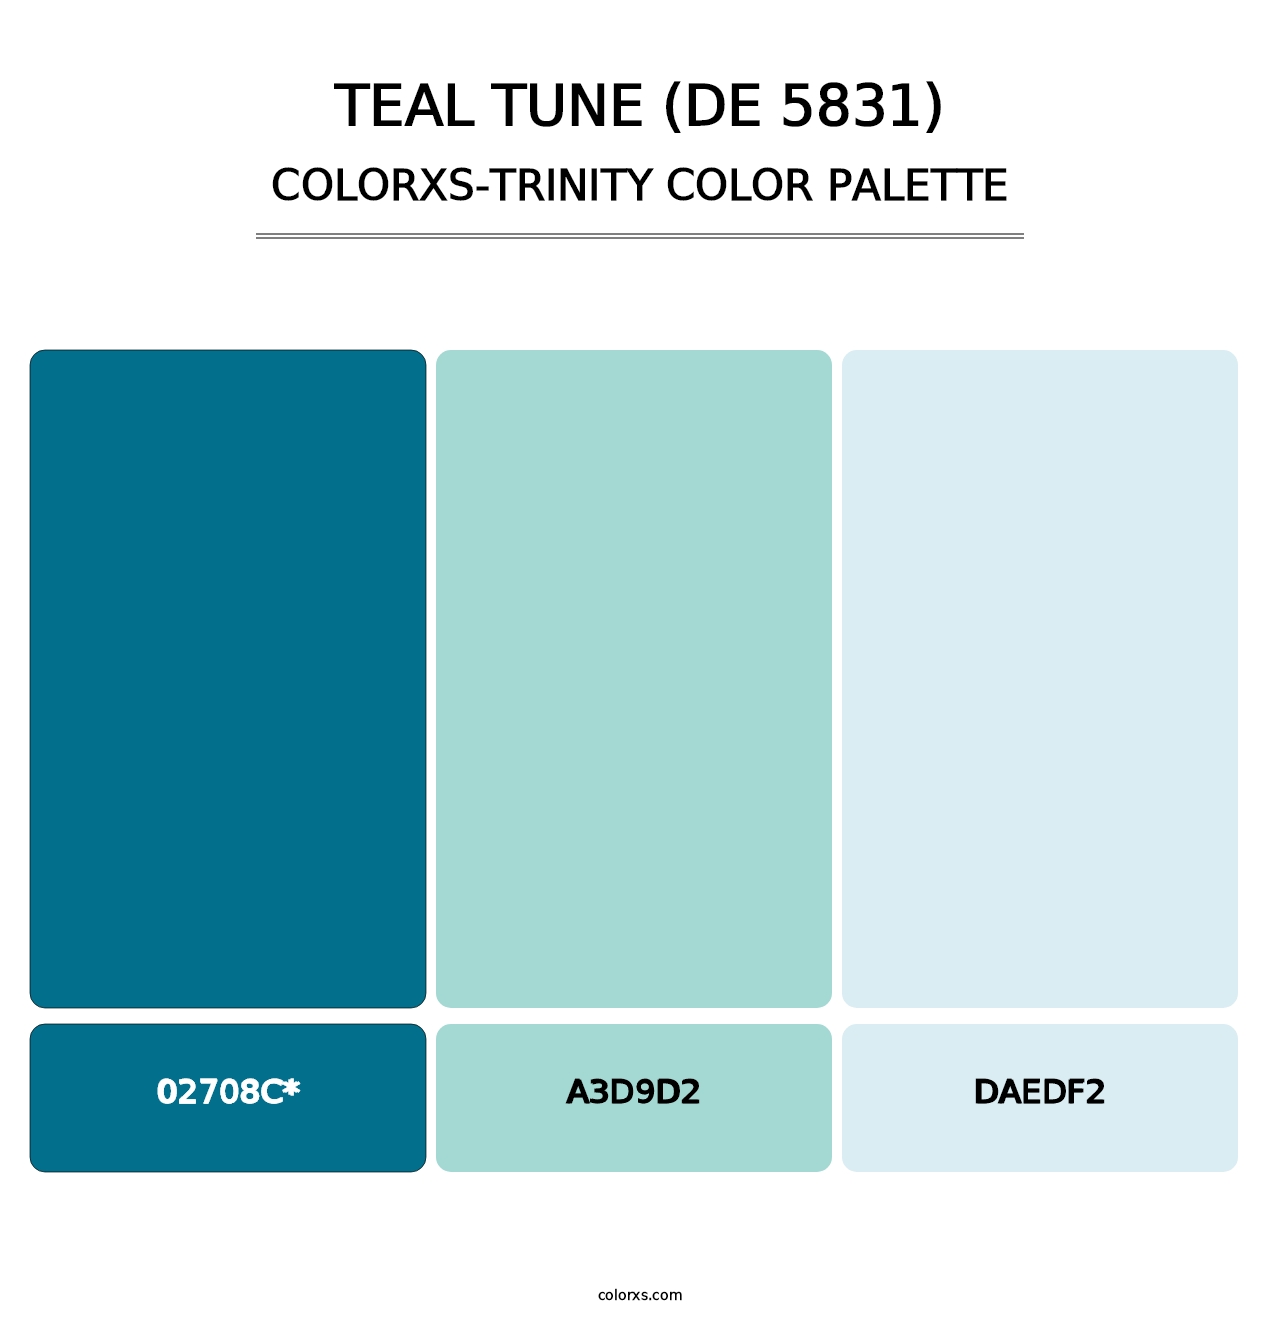 Teal Tune (DE 5831) - Colorxs Trinity Palette